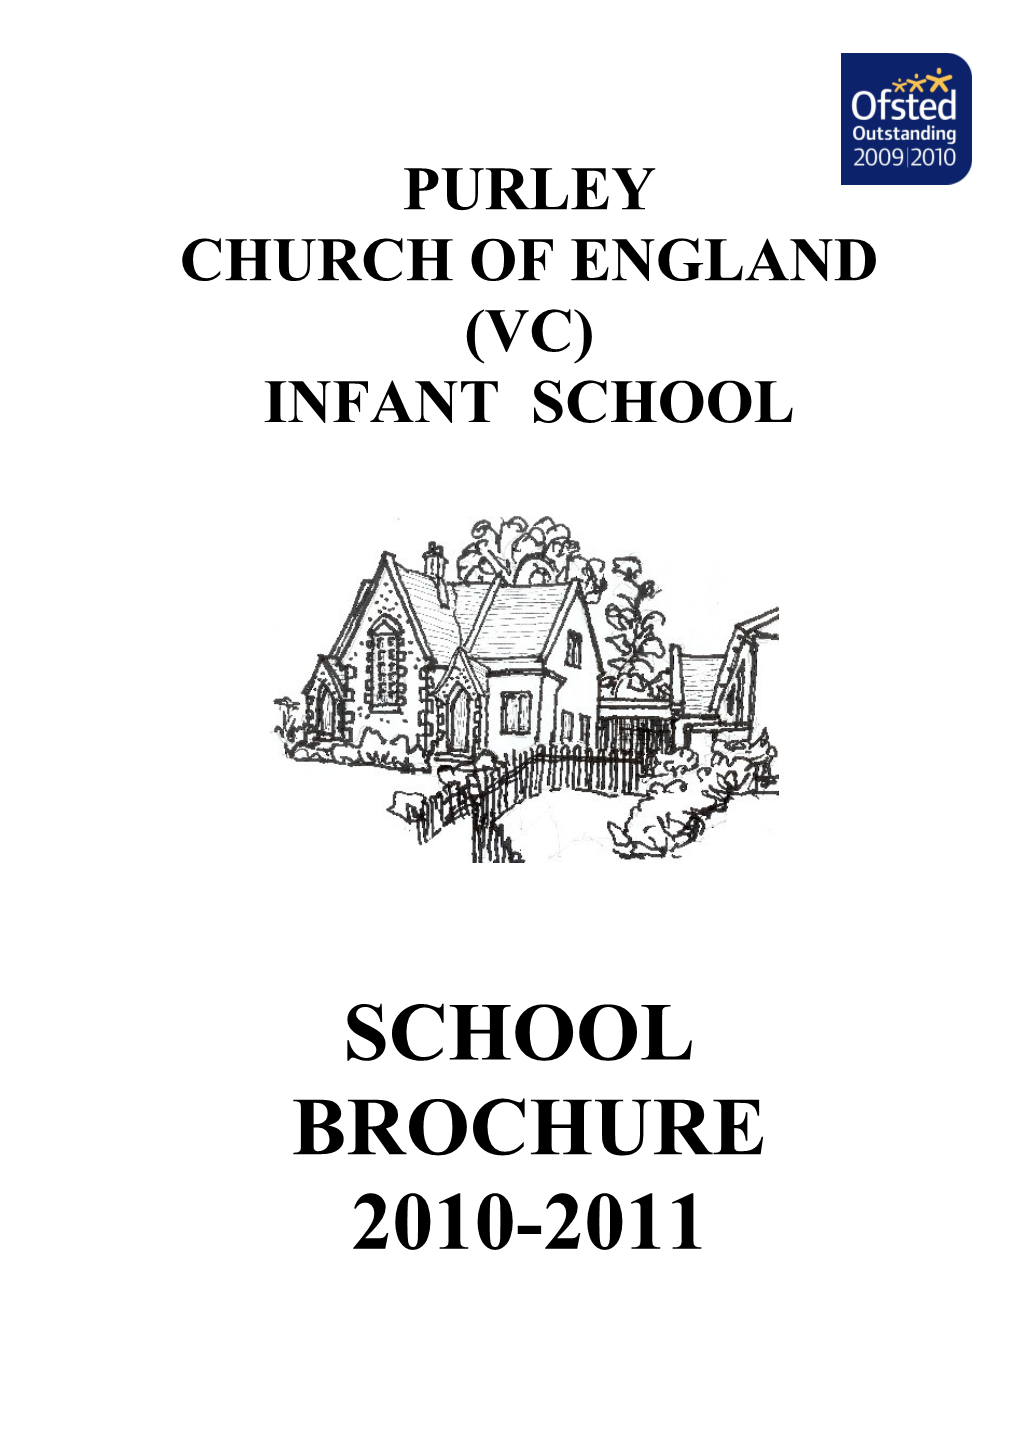 Purley Church of England Infant School